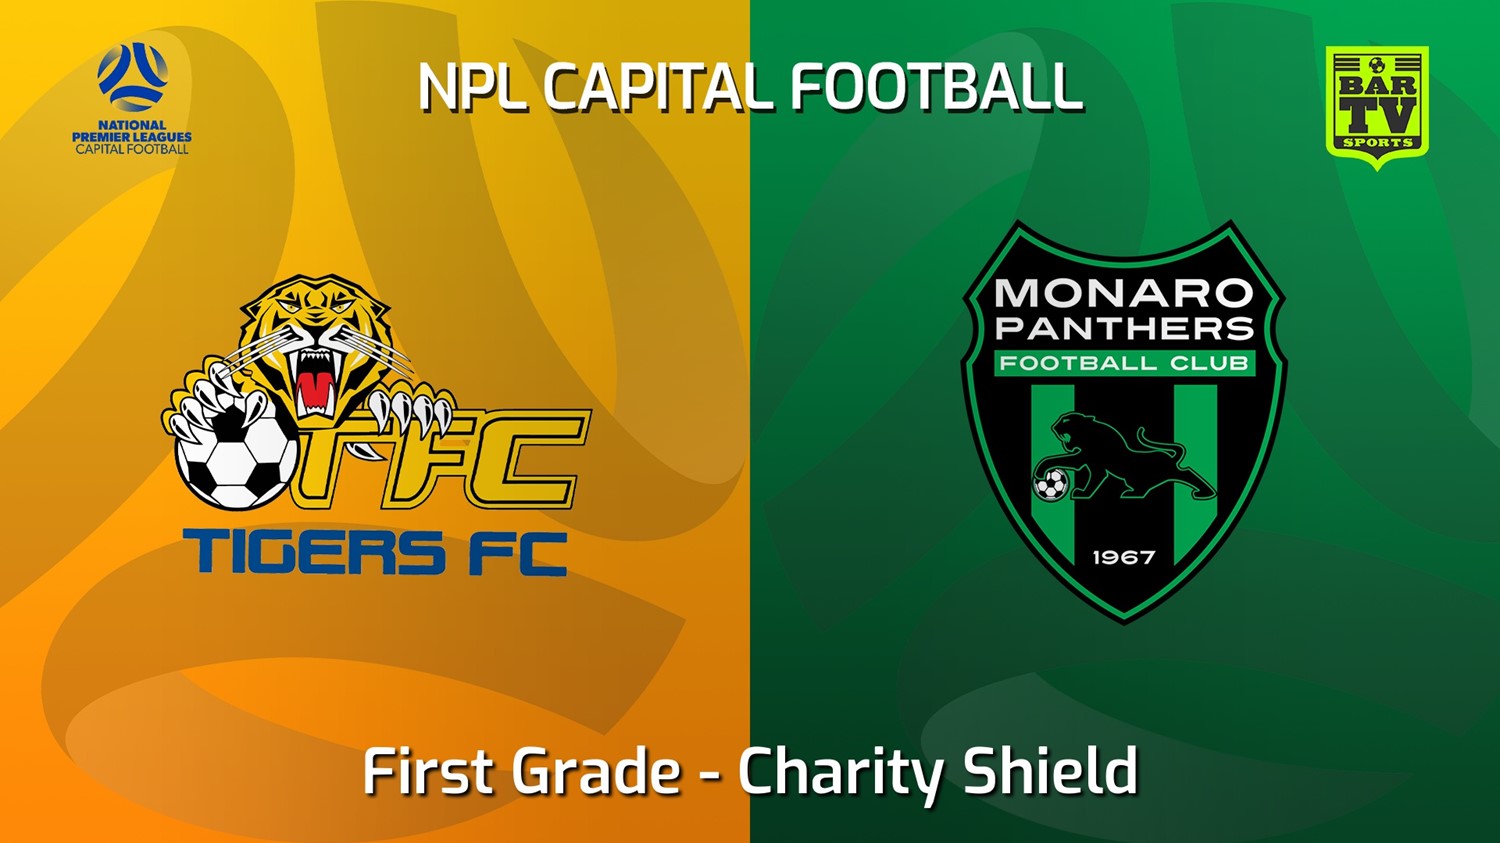 220305-Capital NPL Charity Shield - Tigers FC v Monaro Panthers FC (1) Slate Image